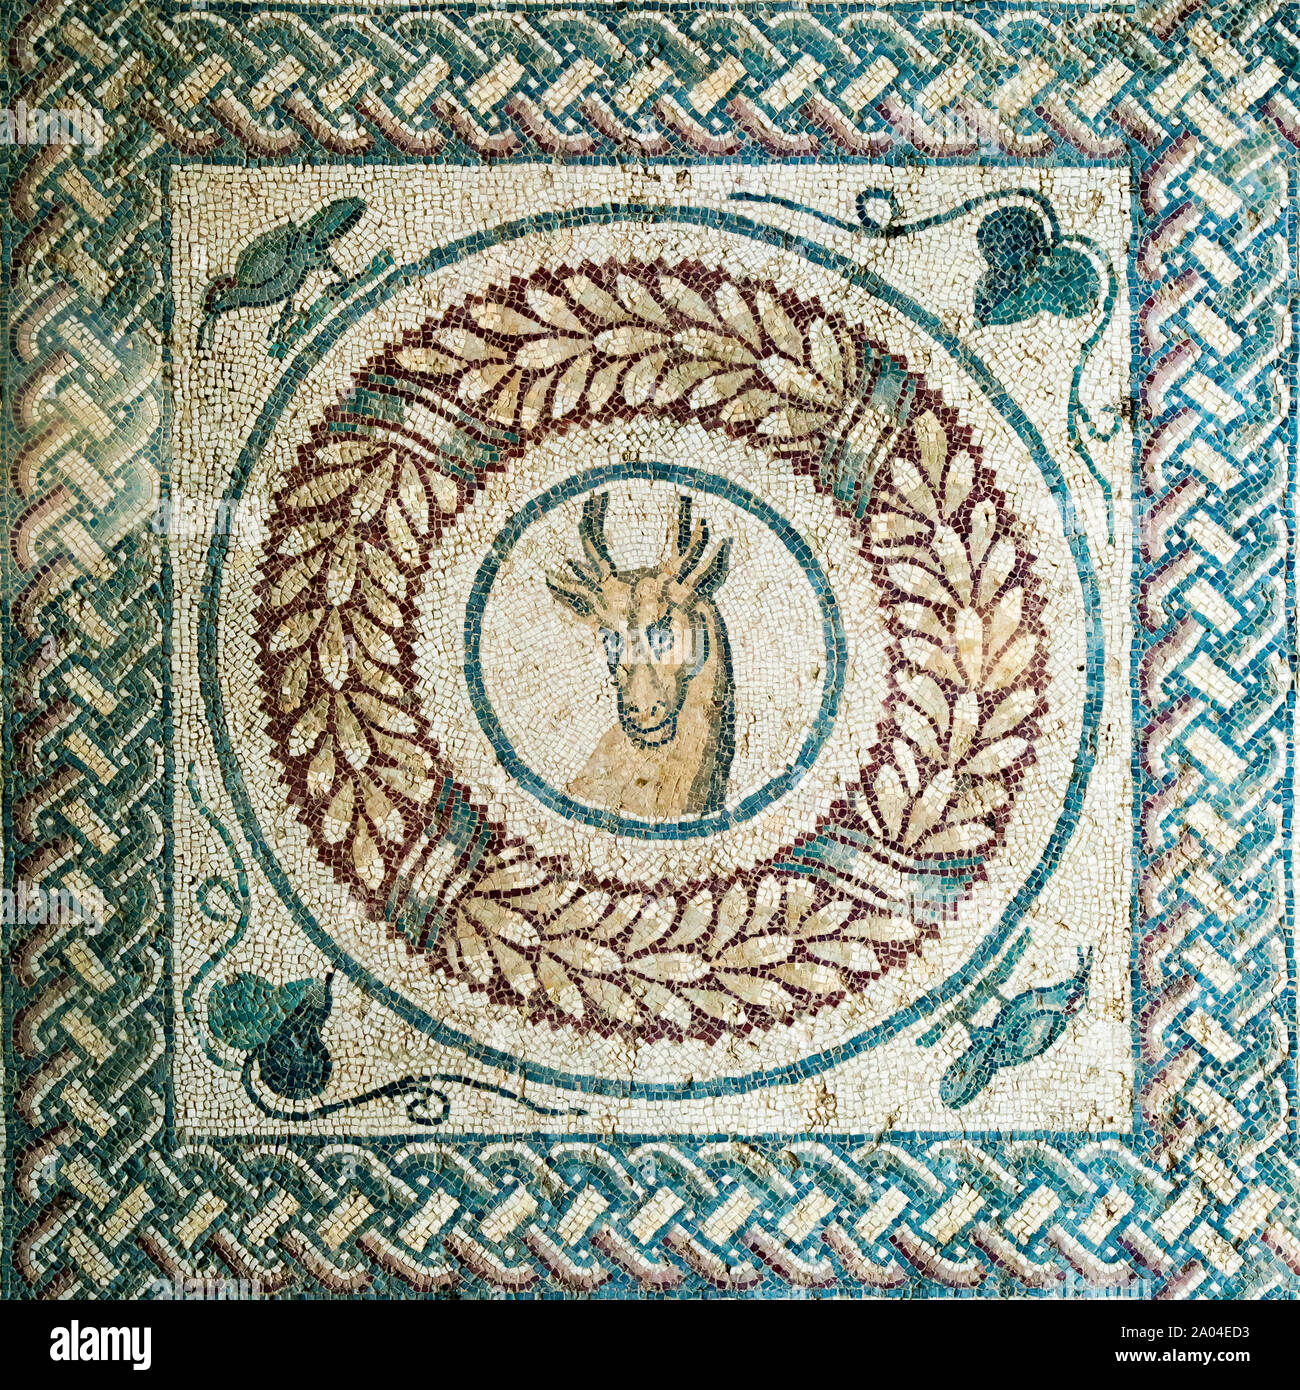 Antelope head in ancient roman mosaic, Sicily Stock Photo